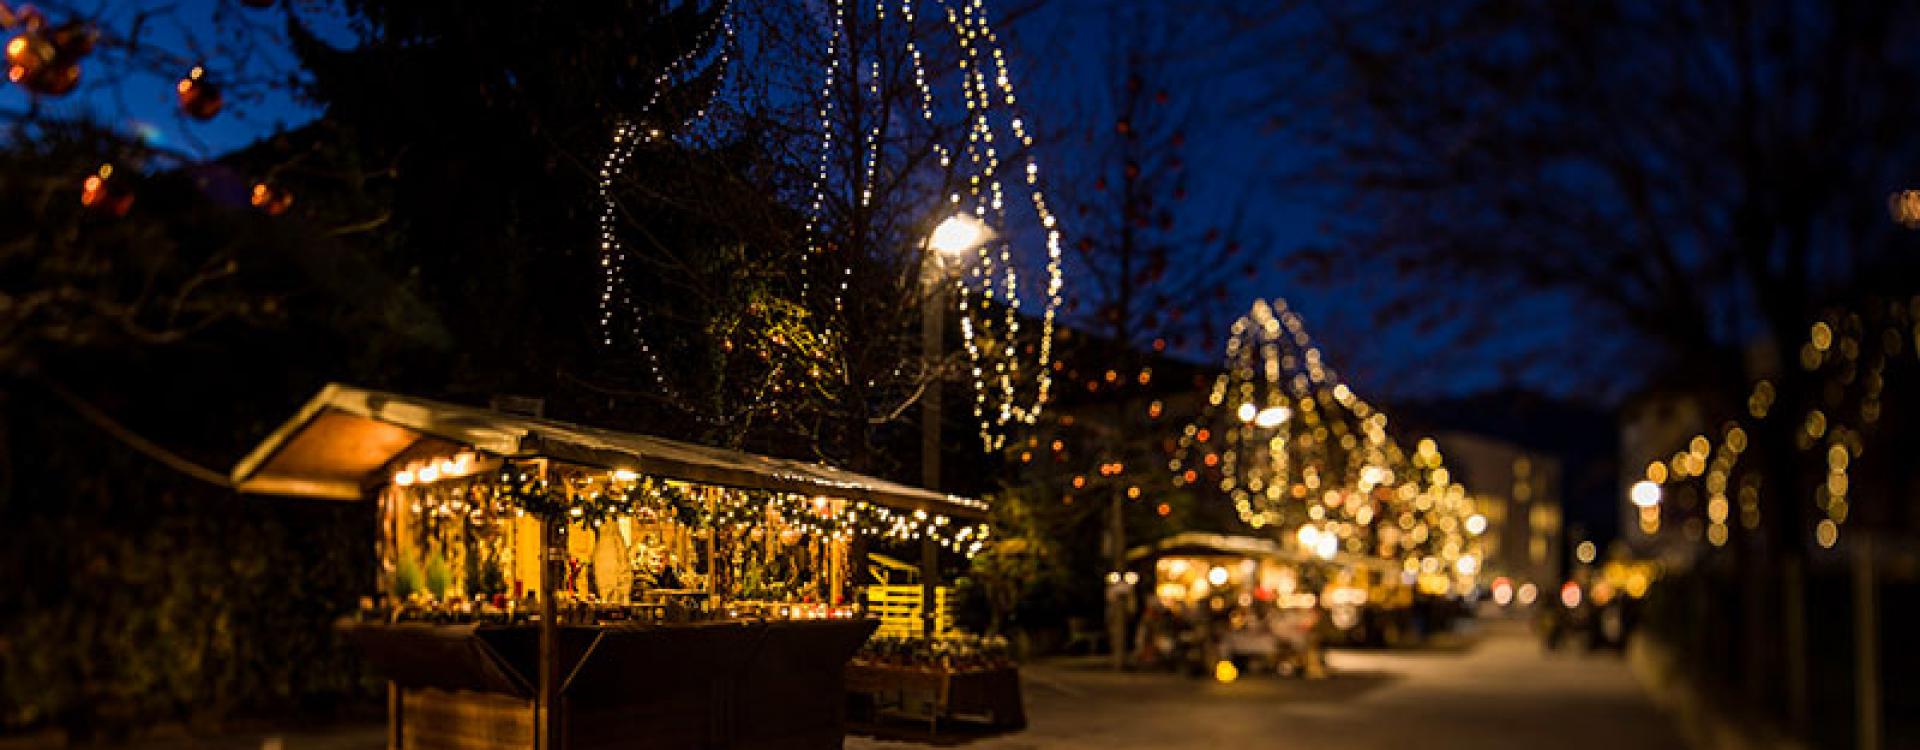 Sterntal Christmas market in Lana